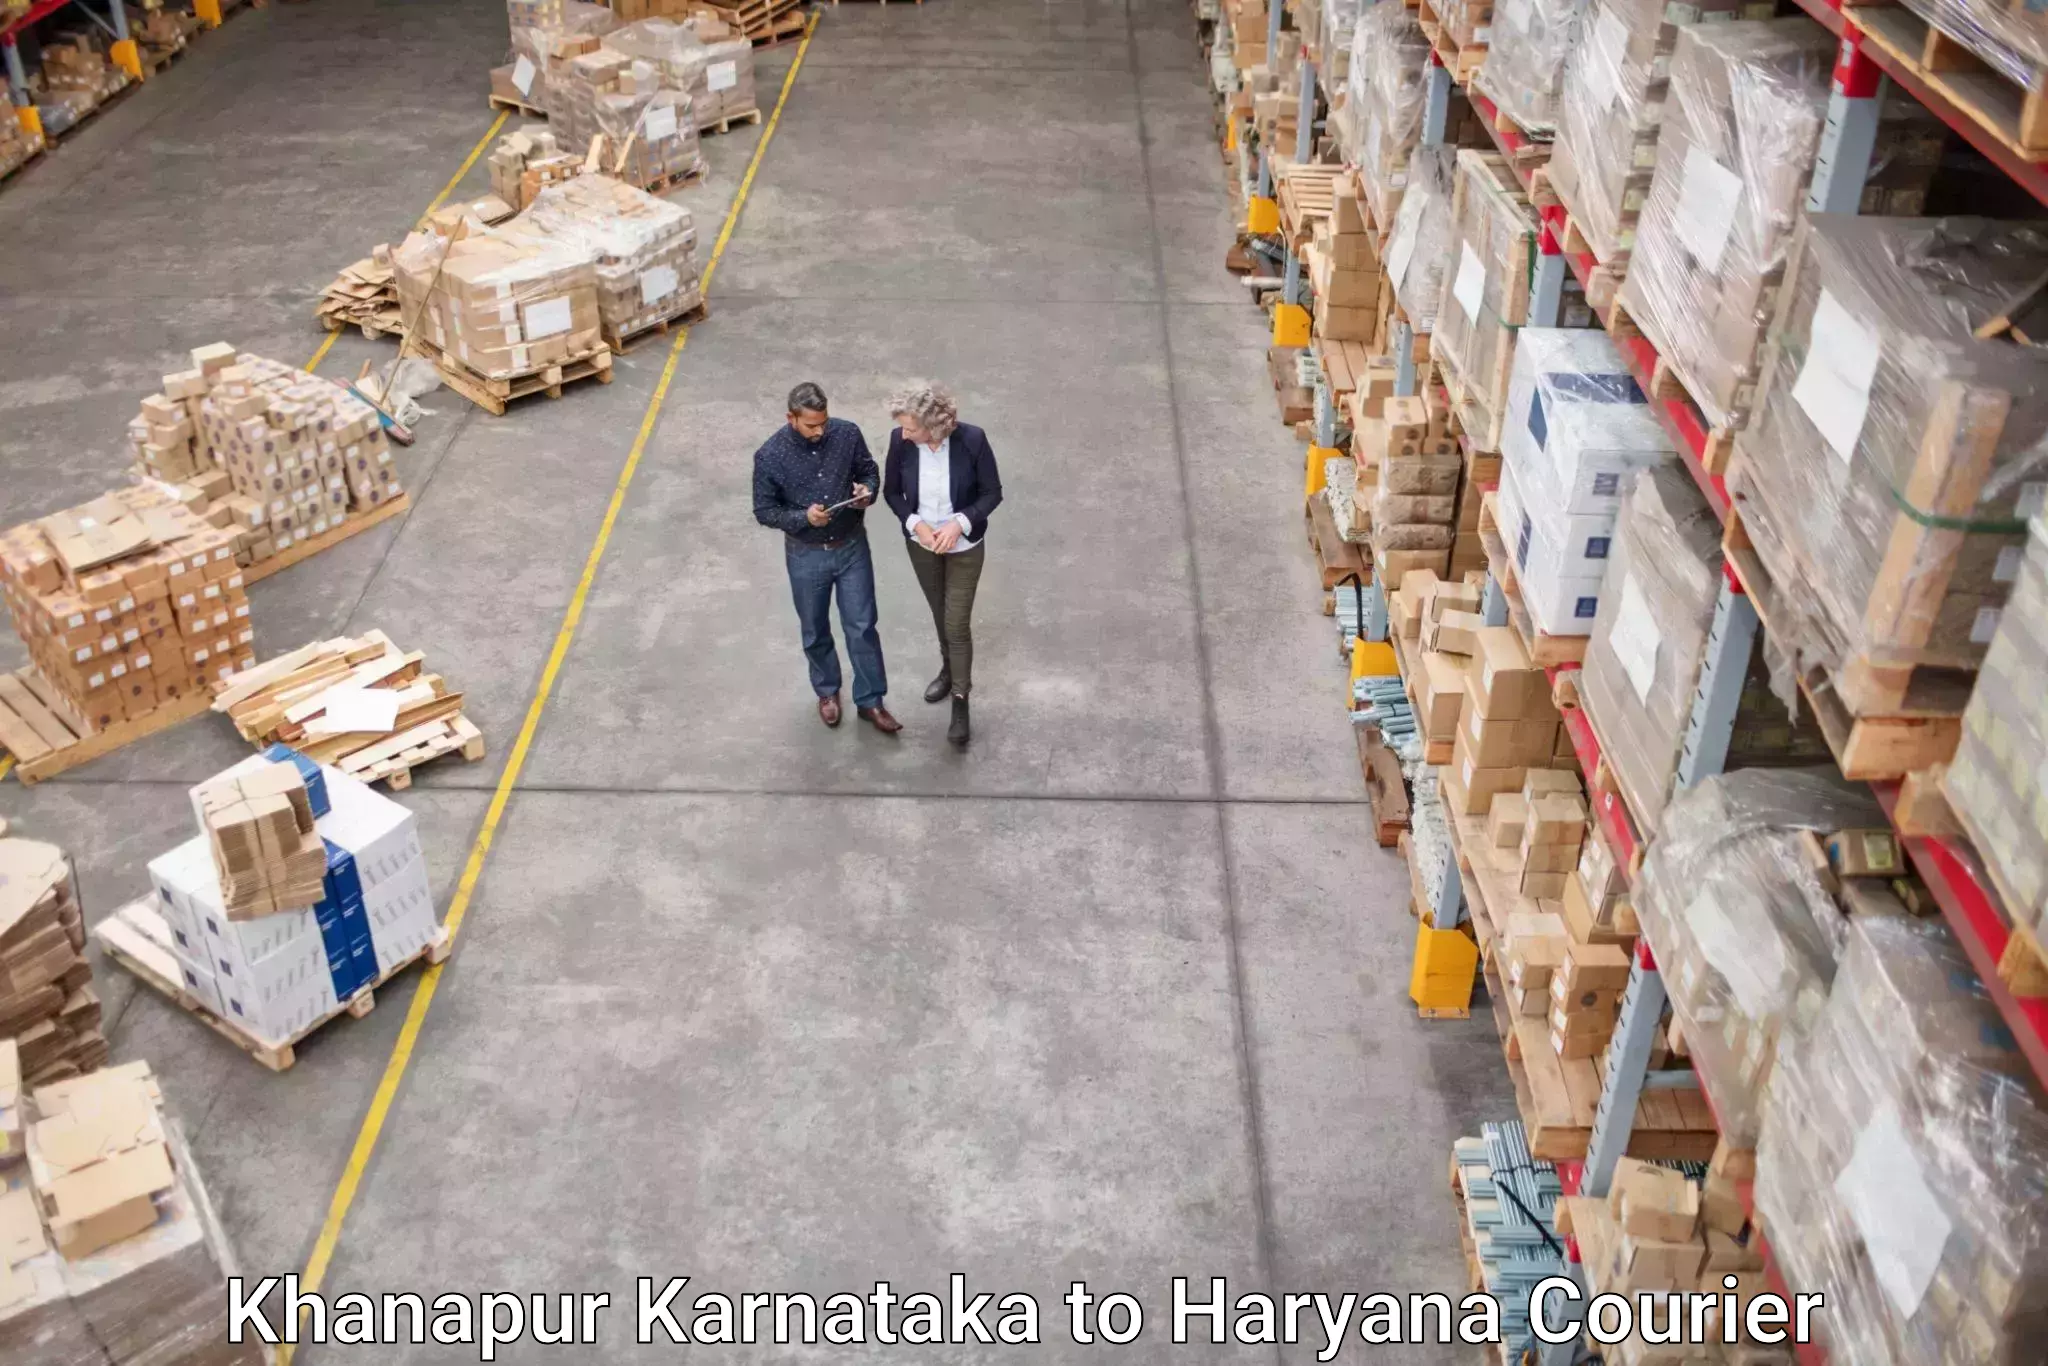 Small parcel delivery Khanapur Karnataka to Haryana